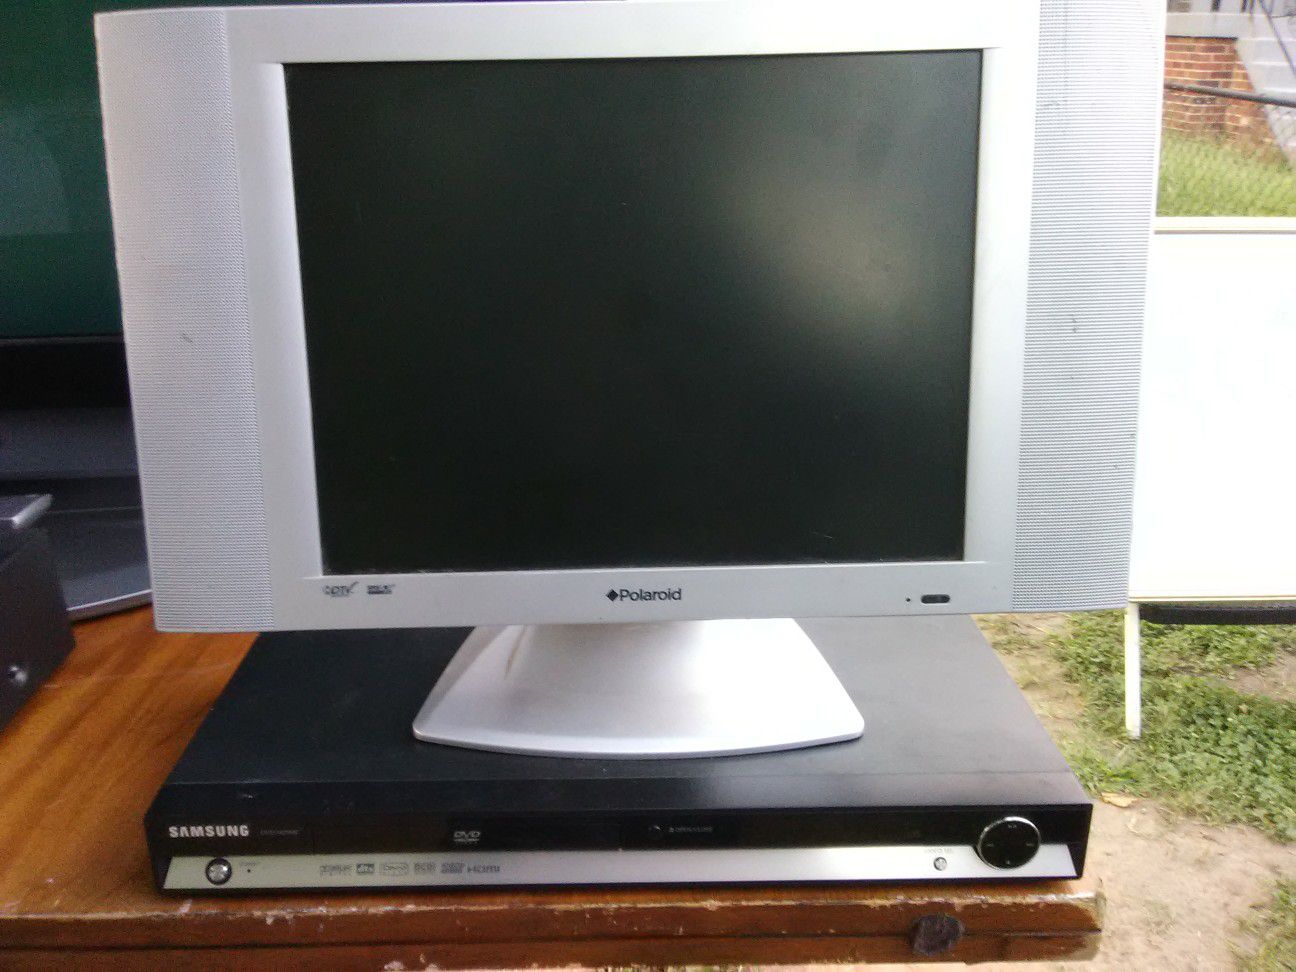 Polaroid 15 inch TV with Samsung DVD player